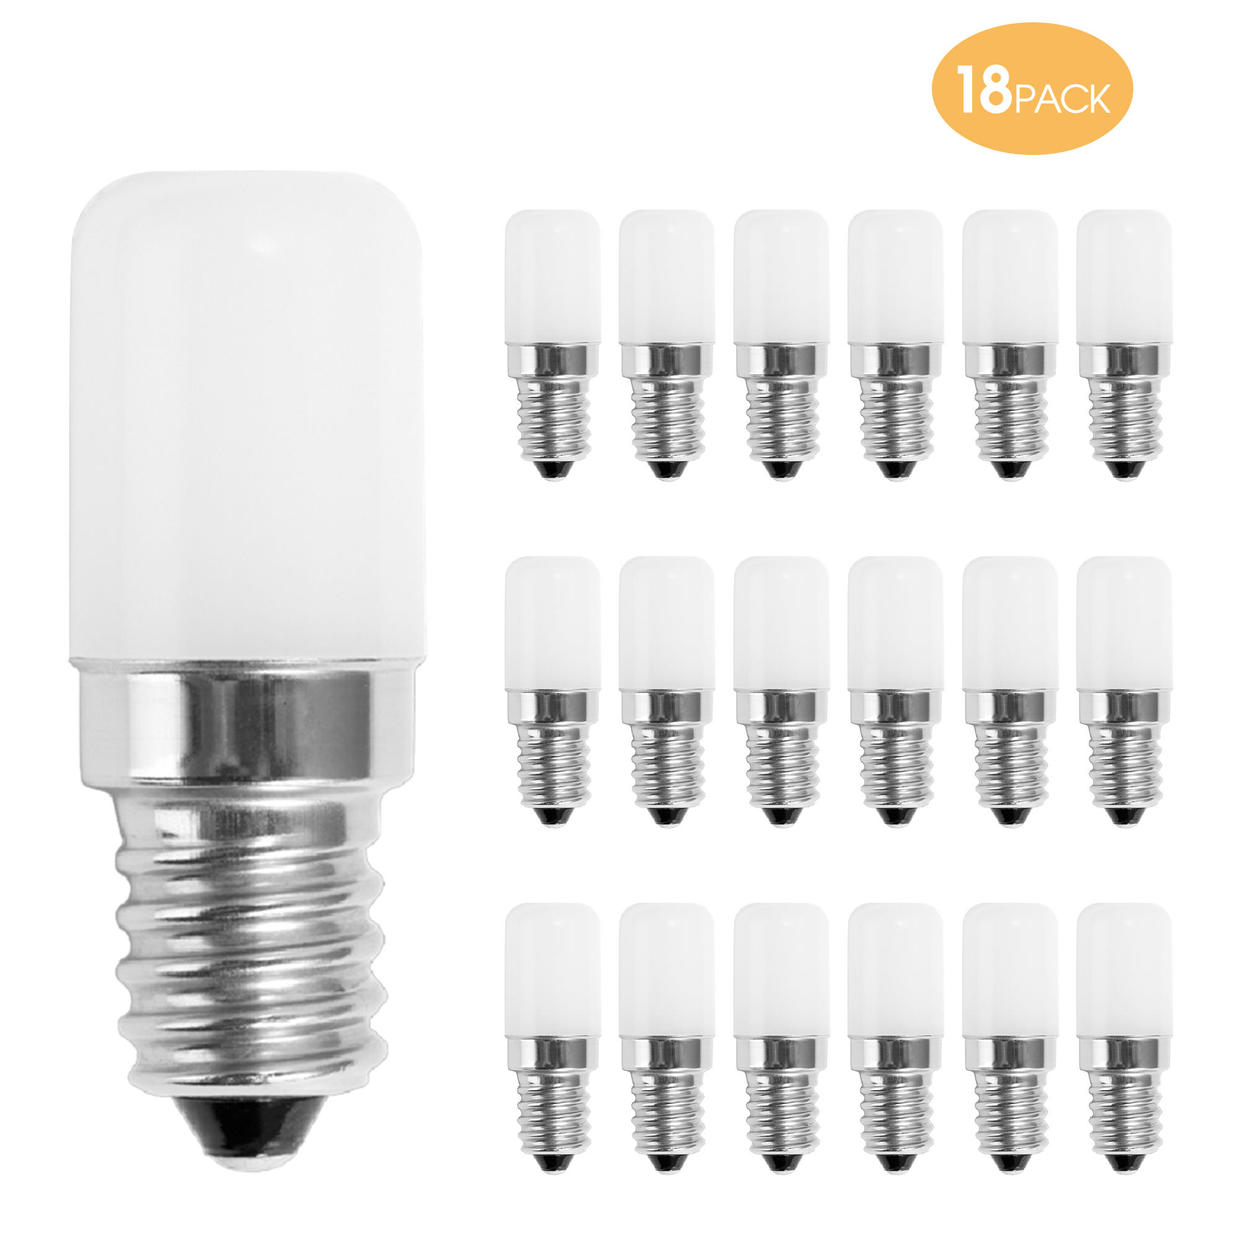 C7 S6 Night Light Bulbs, Warm White 3000K Watt Equivalent, Mini LED Bulb Candelabra LED